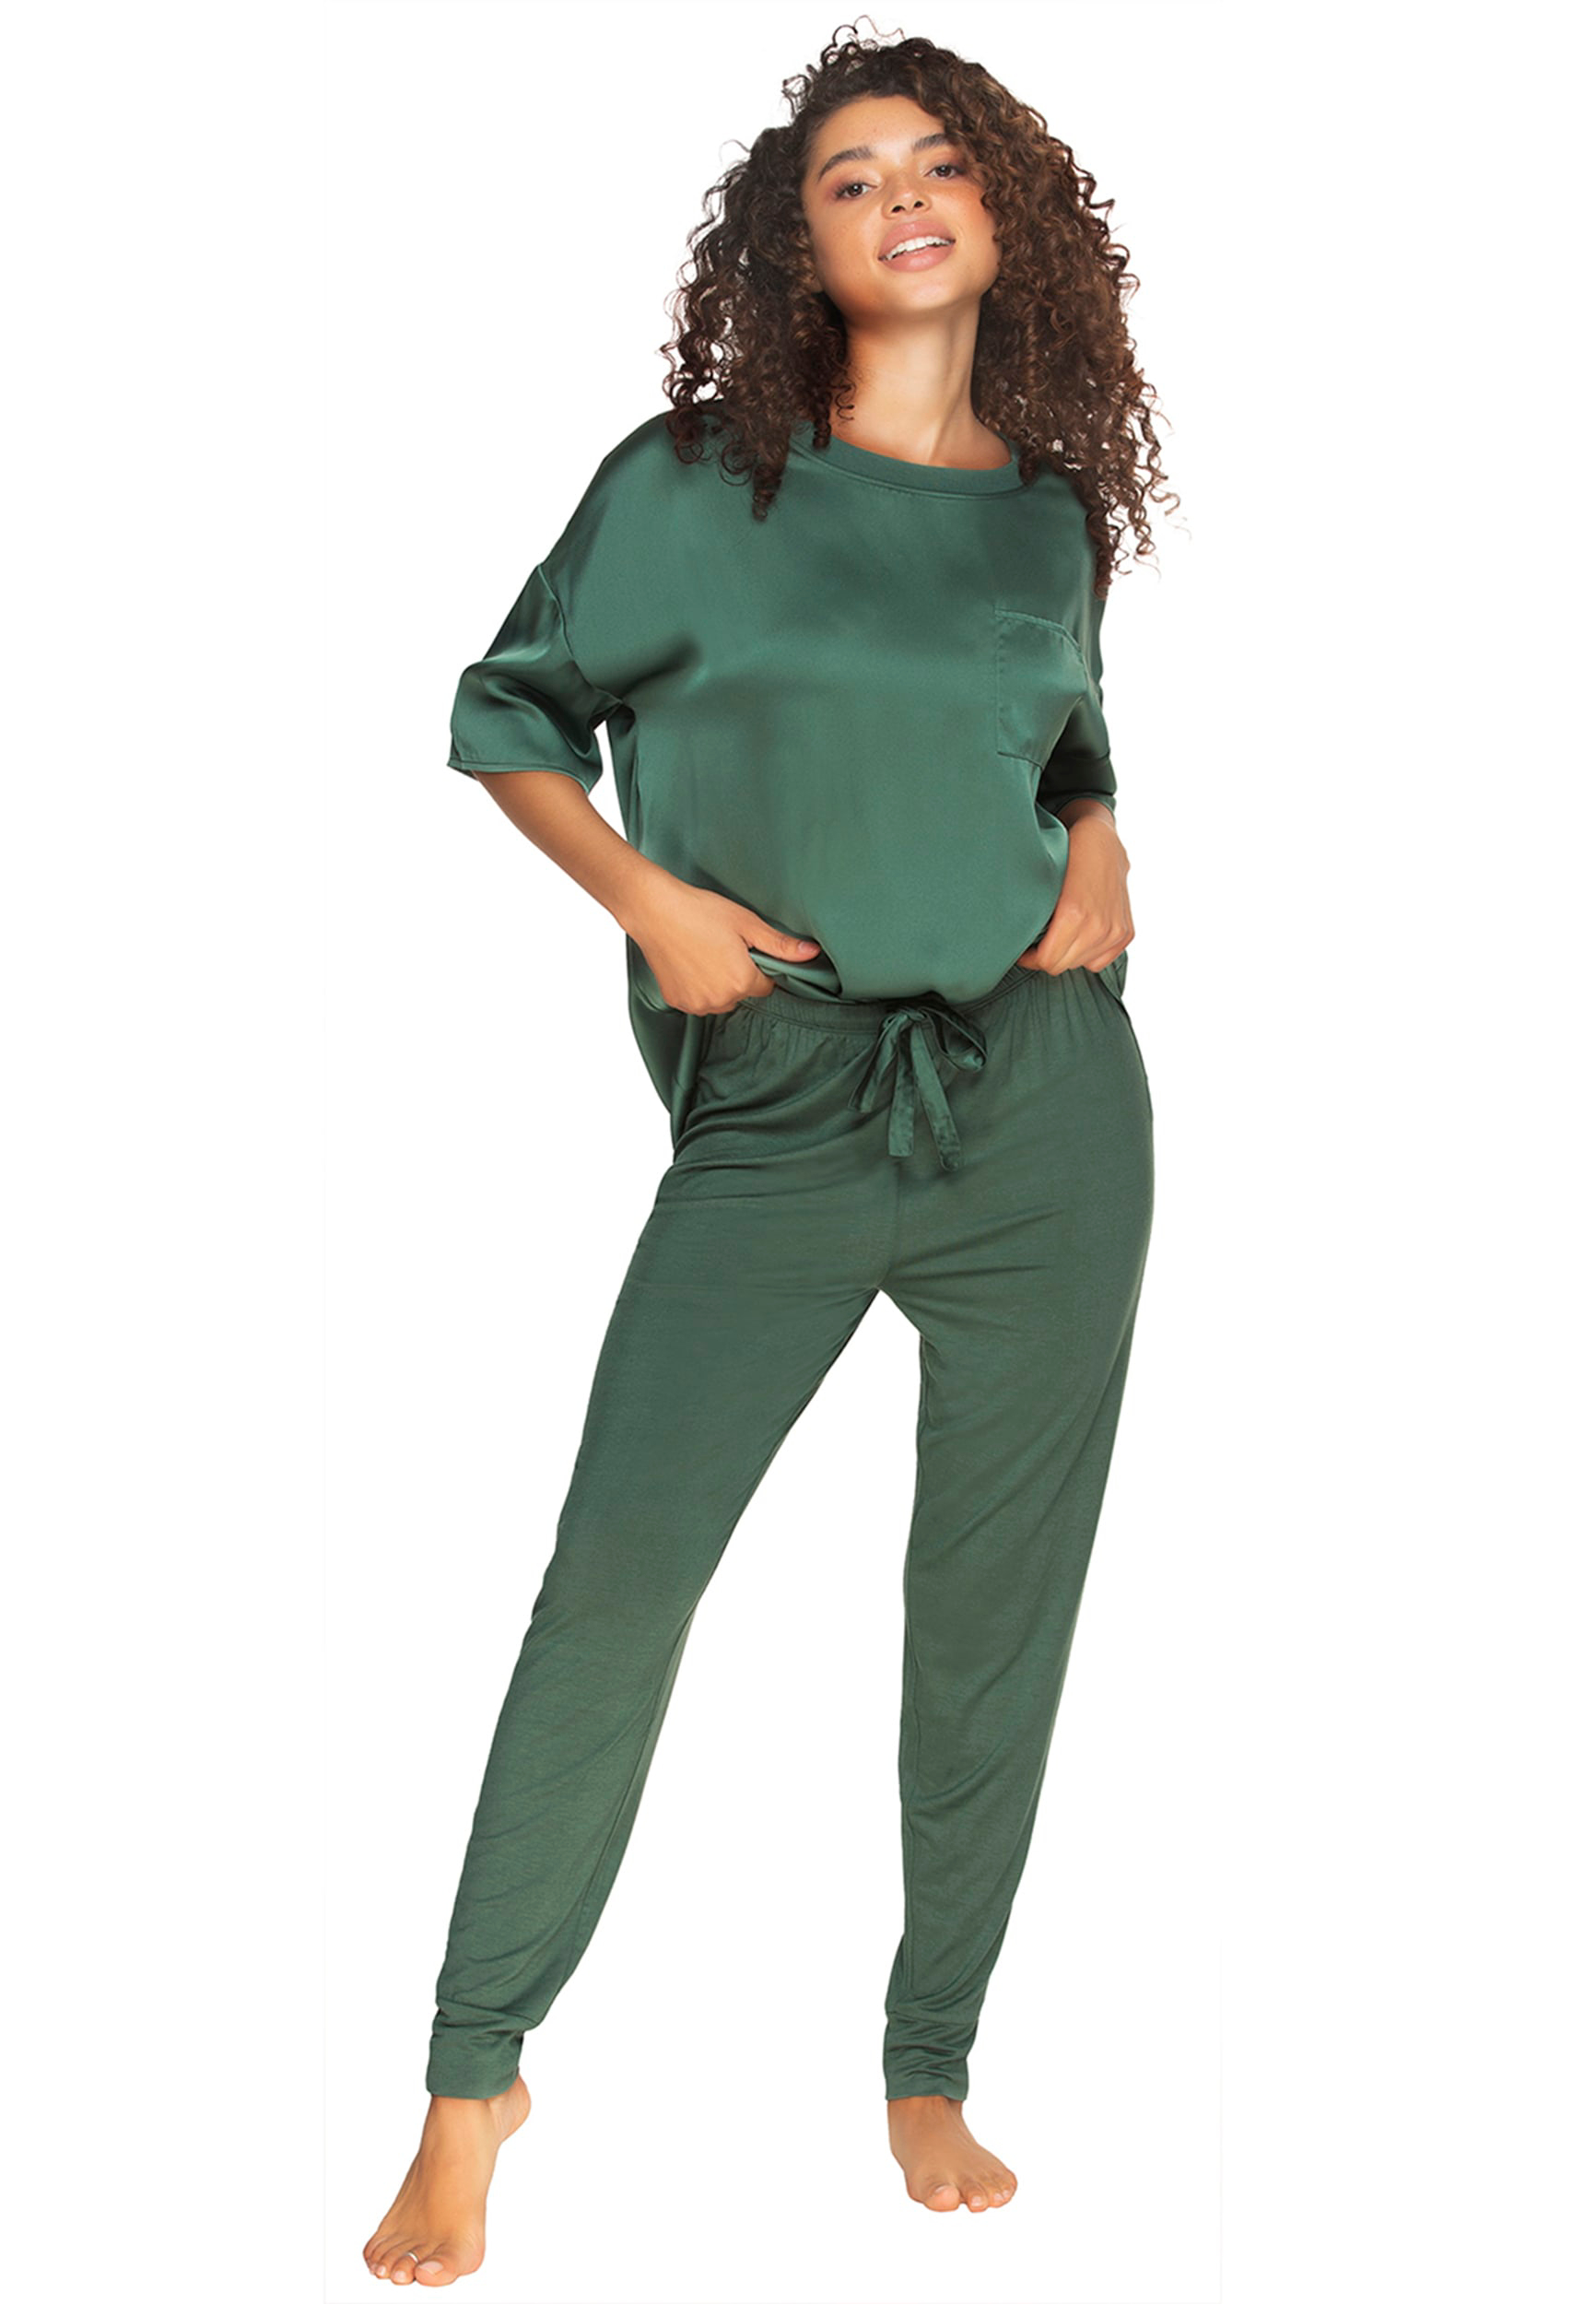 zuwimk Pajamas For Women Set,Women's Plus Size Nylon Tricot Short Sleeve Matching  Pajama Set Mint Green,S 